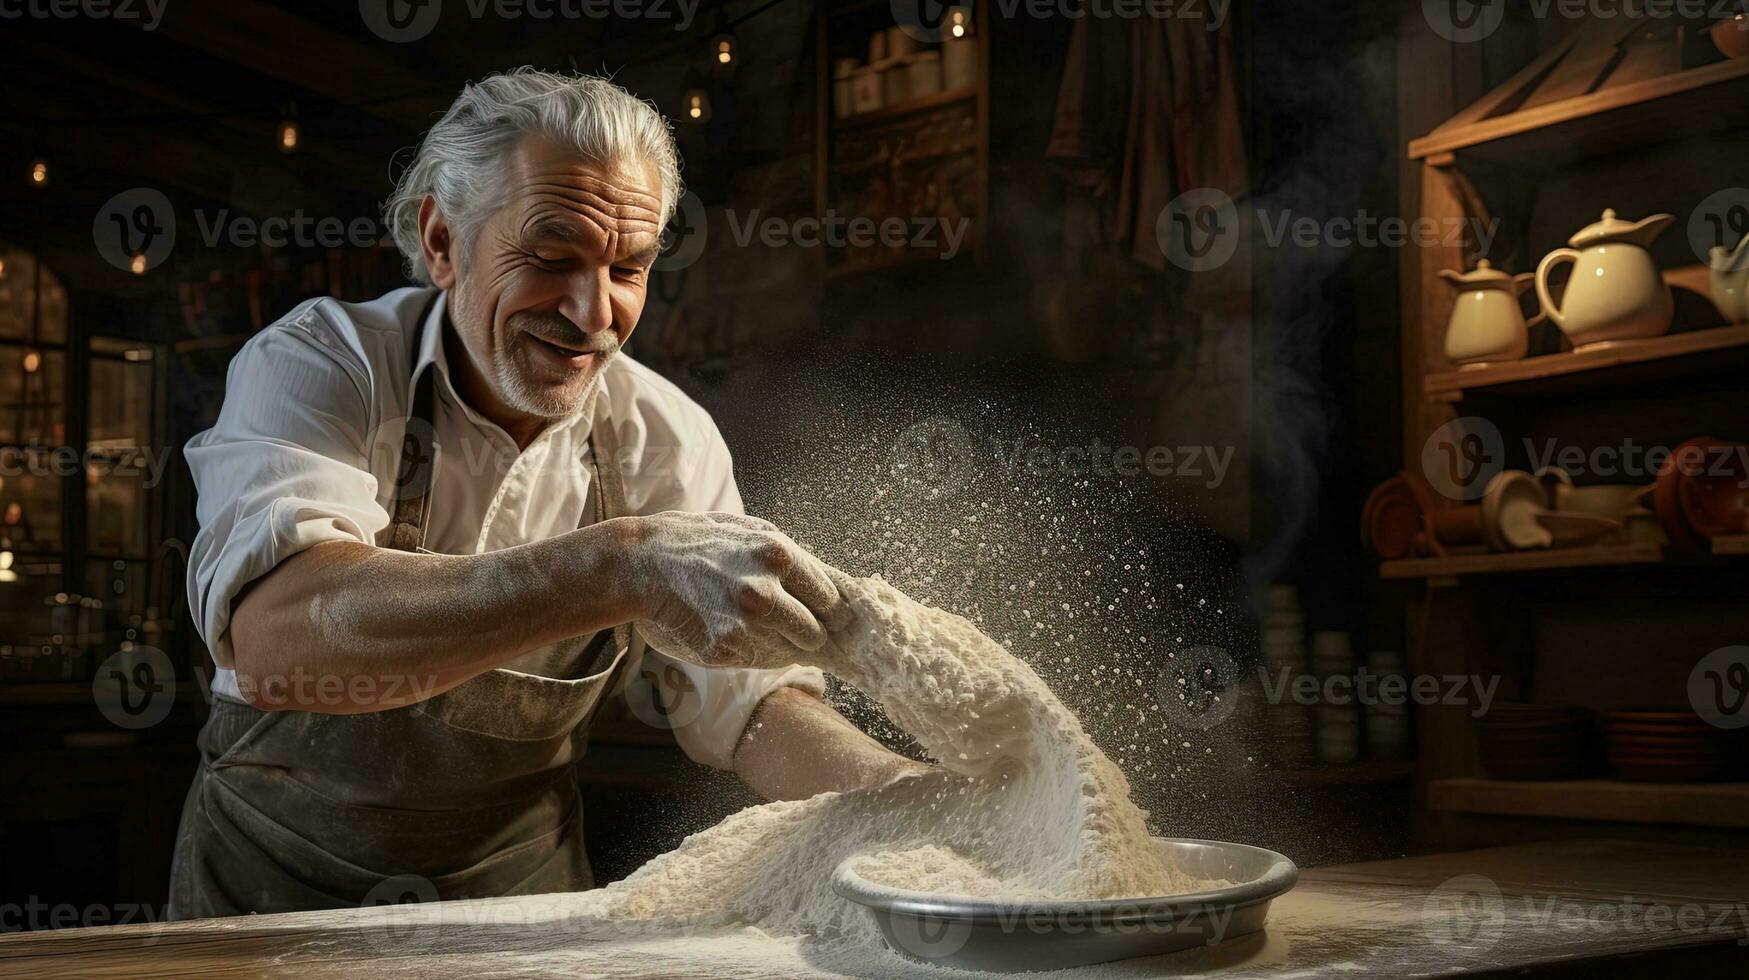 generativo ai, antiguo hombre manos de panadero en restaurante o hogar cocina, prepara ecológicamente natural pasteles foto